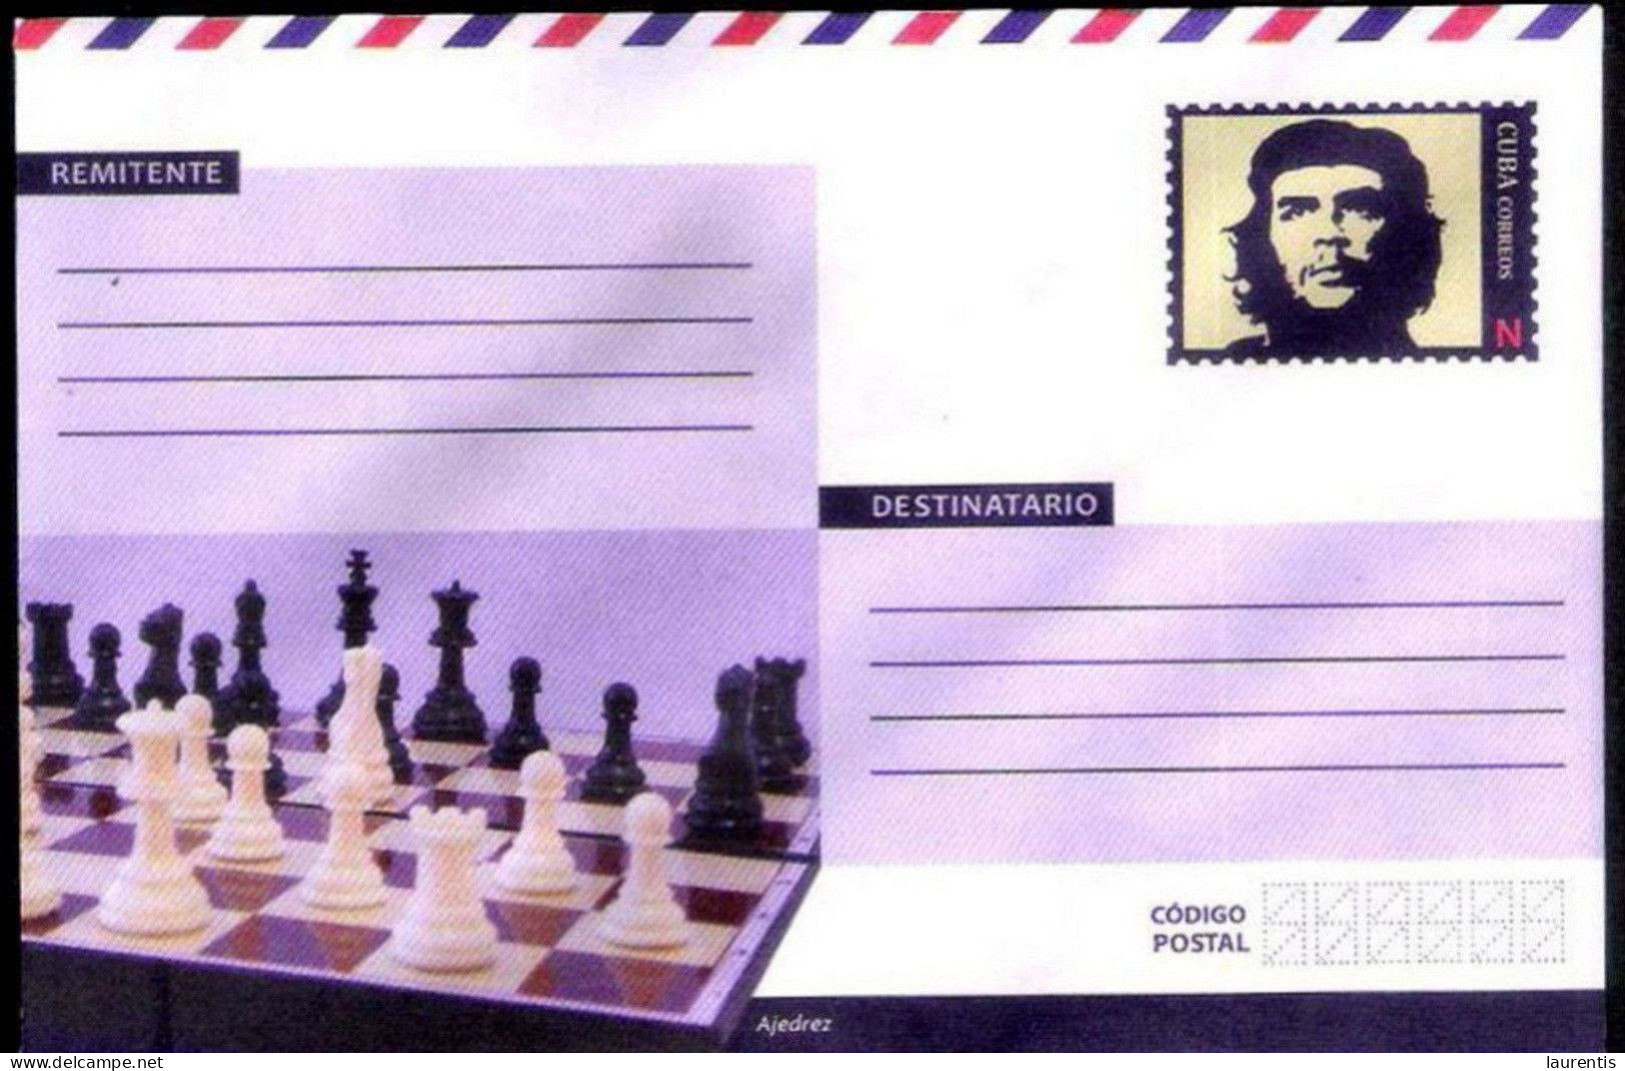 2583  Chess - Echecs - Che - Postal Stationary 2018 - Unused - 2,25l - Schaken